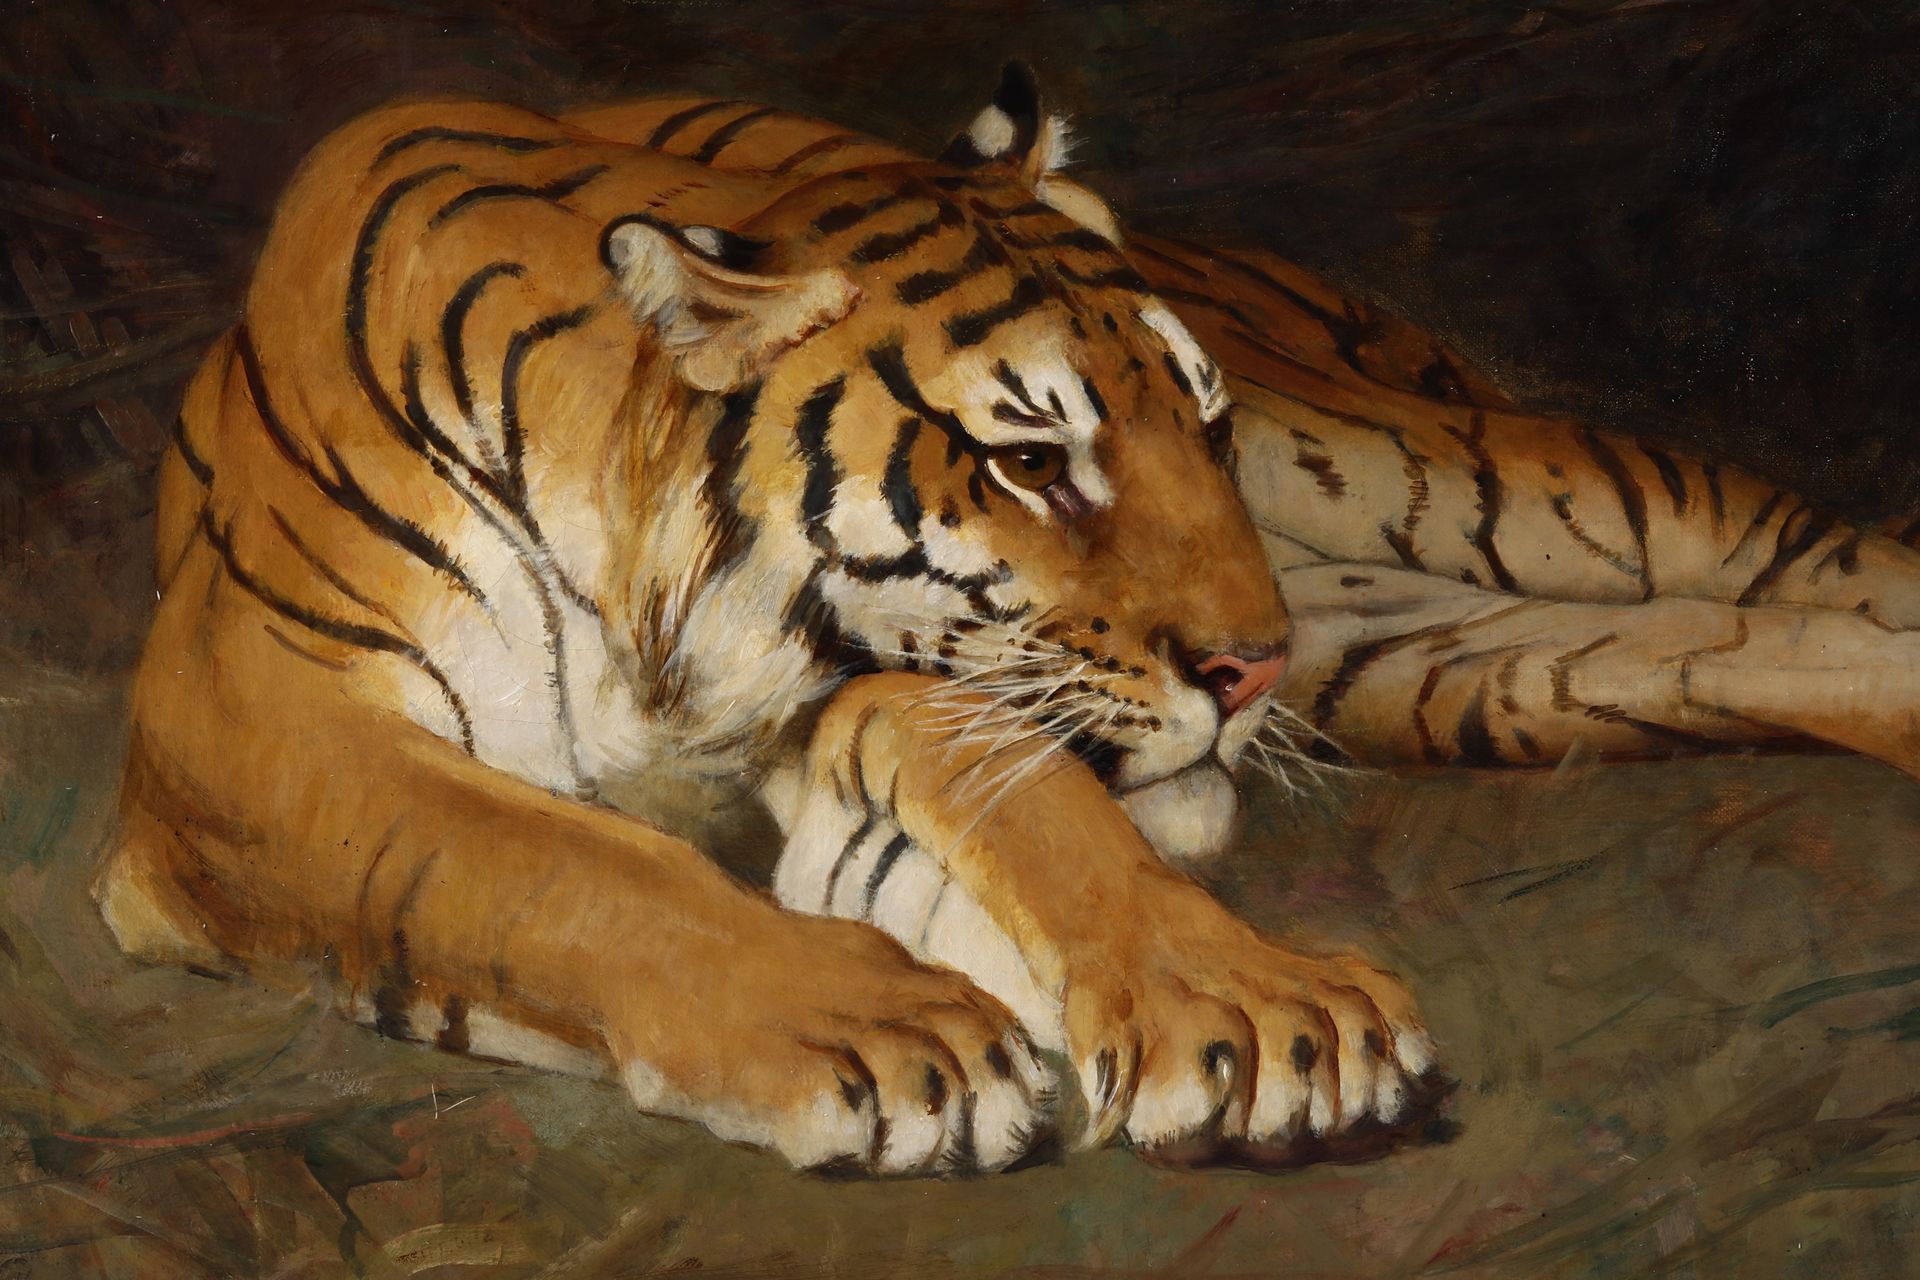 Gustave Surand 1860-1937 休息中的老虎》，1929 年，右下方有签名、年代和献词 宽 61 - 高 46 厘米 布面油画